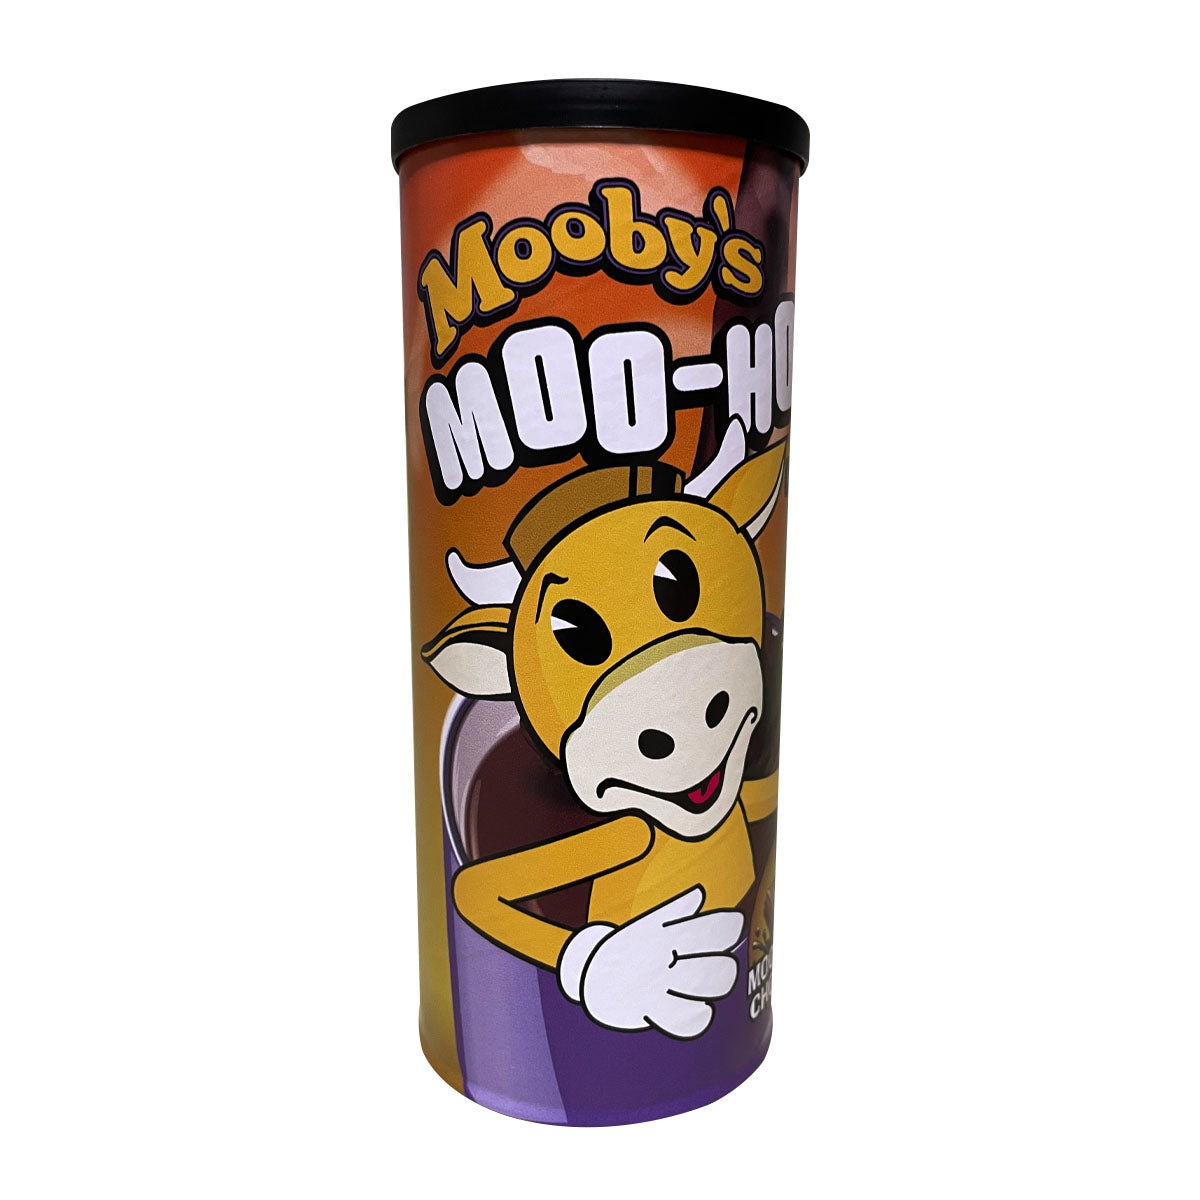 Mooby's Hot Chocolate : Mooriginal Chocolate